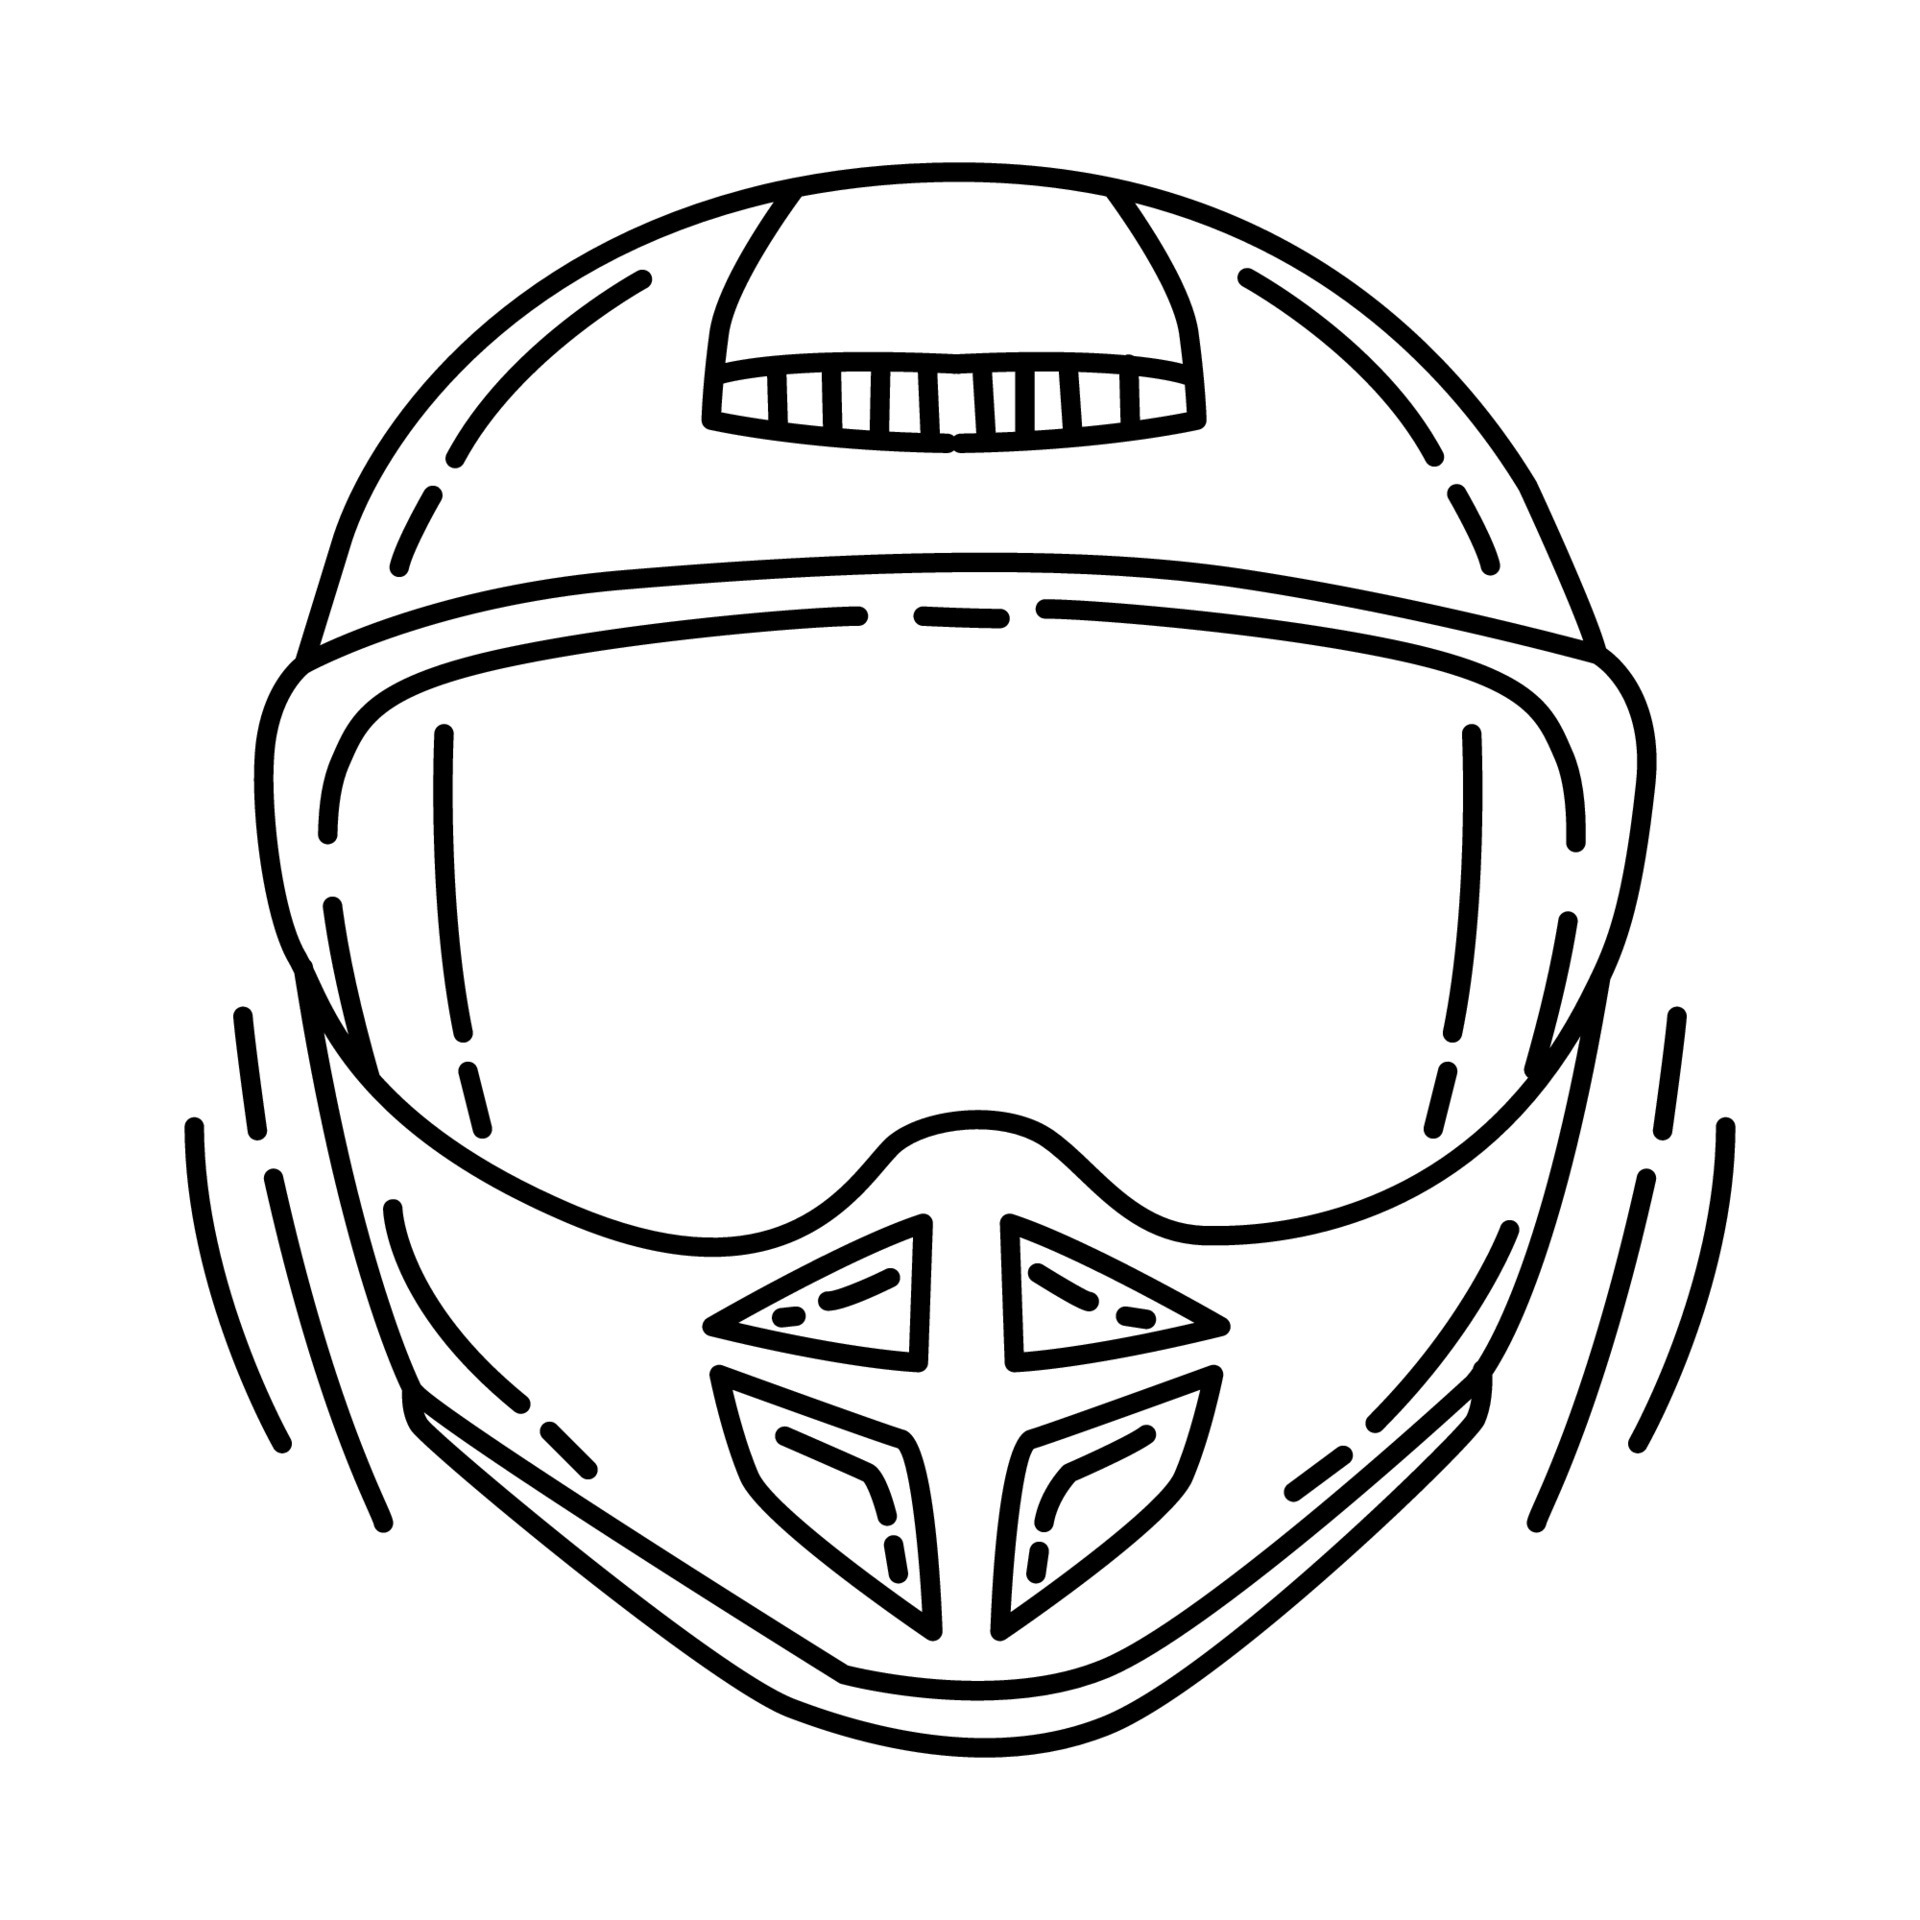 Motorcycle helmet hand drawn outline doodle  Stock Illustration  86239226  PIXTA